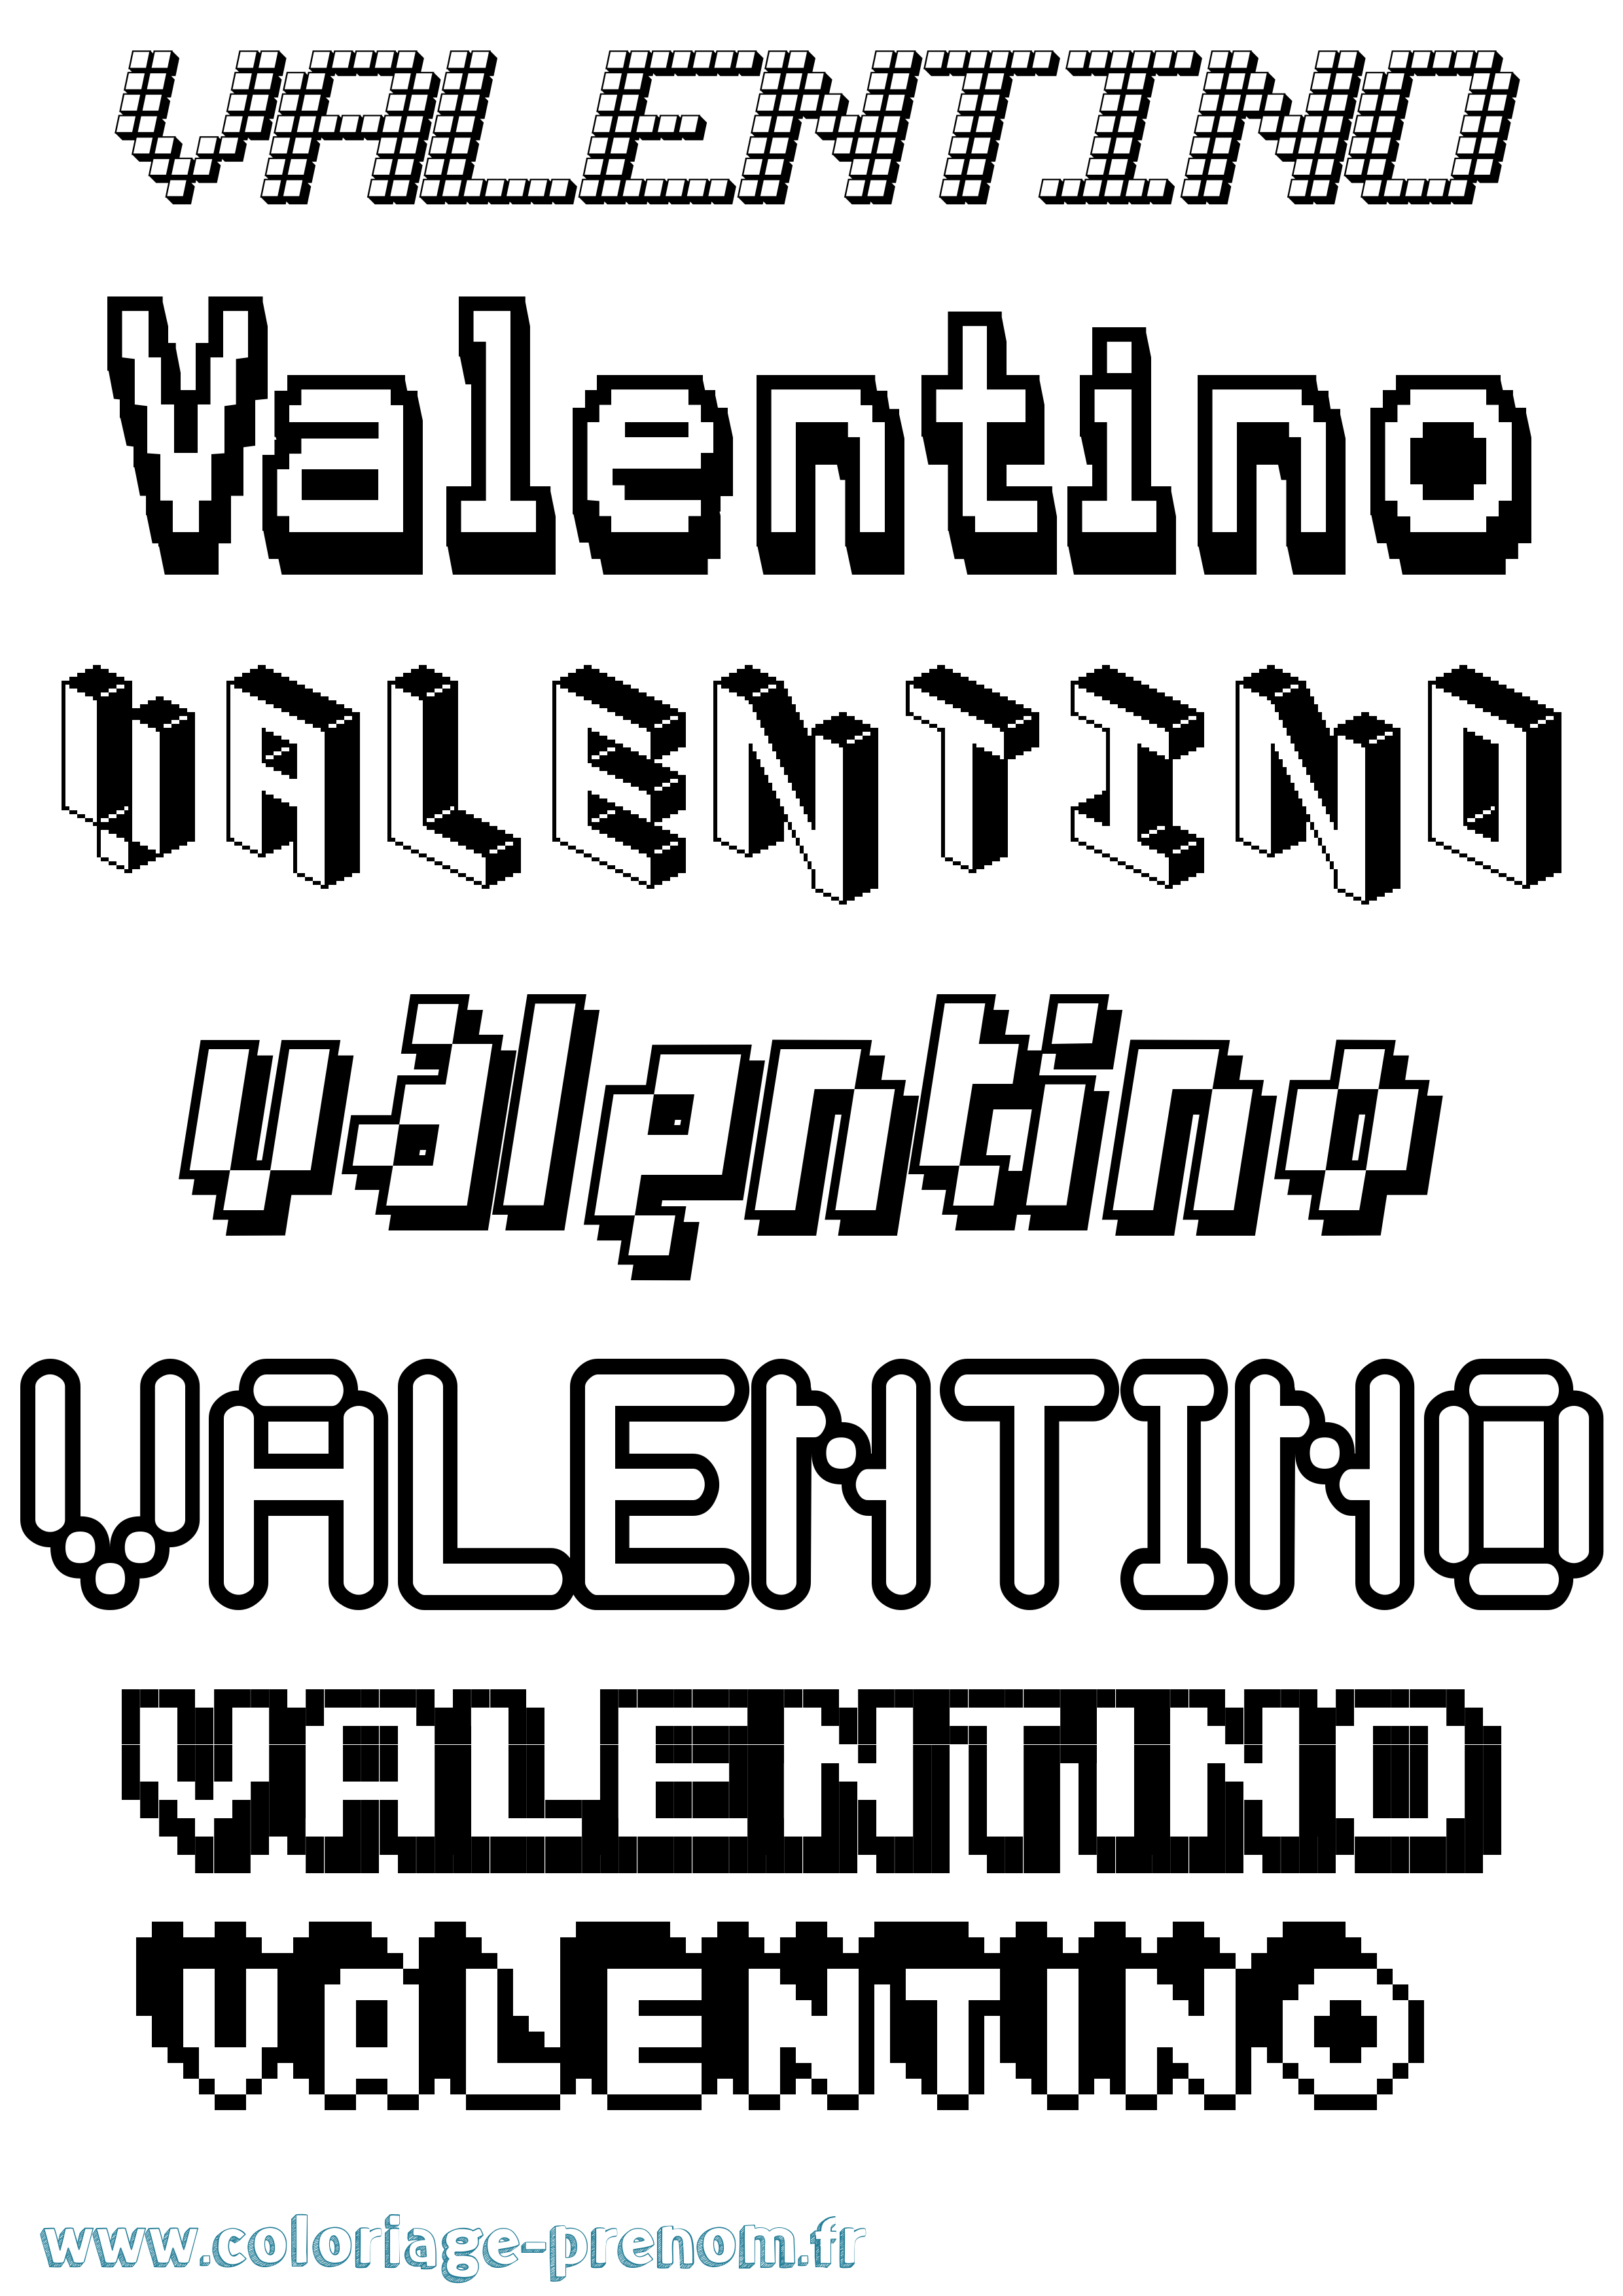 Coloriage prénom Valentino